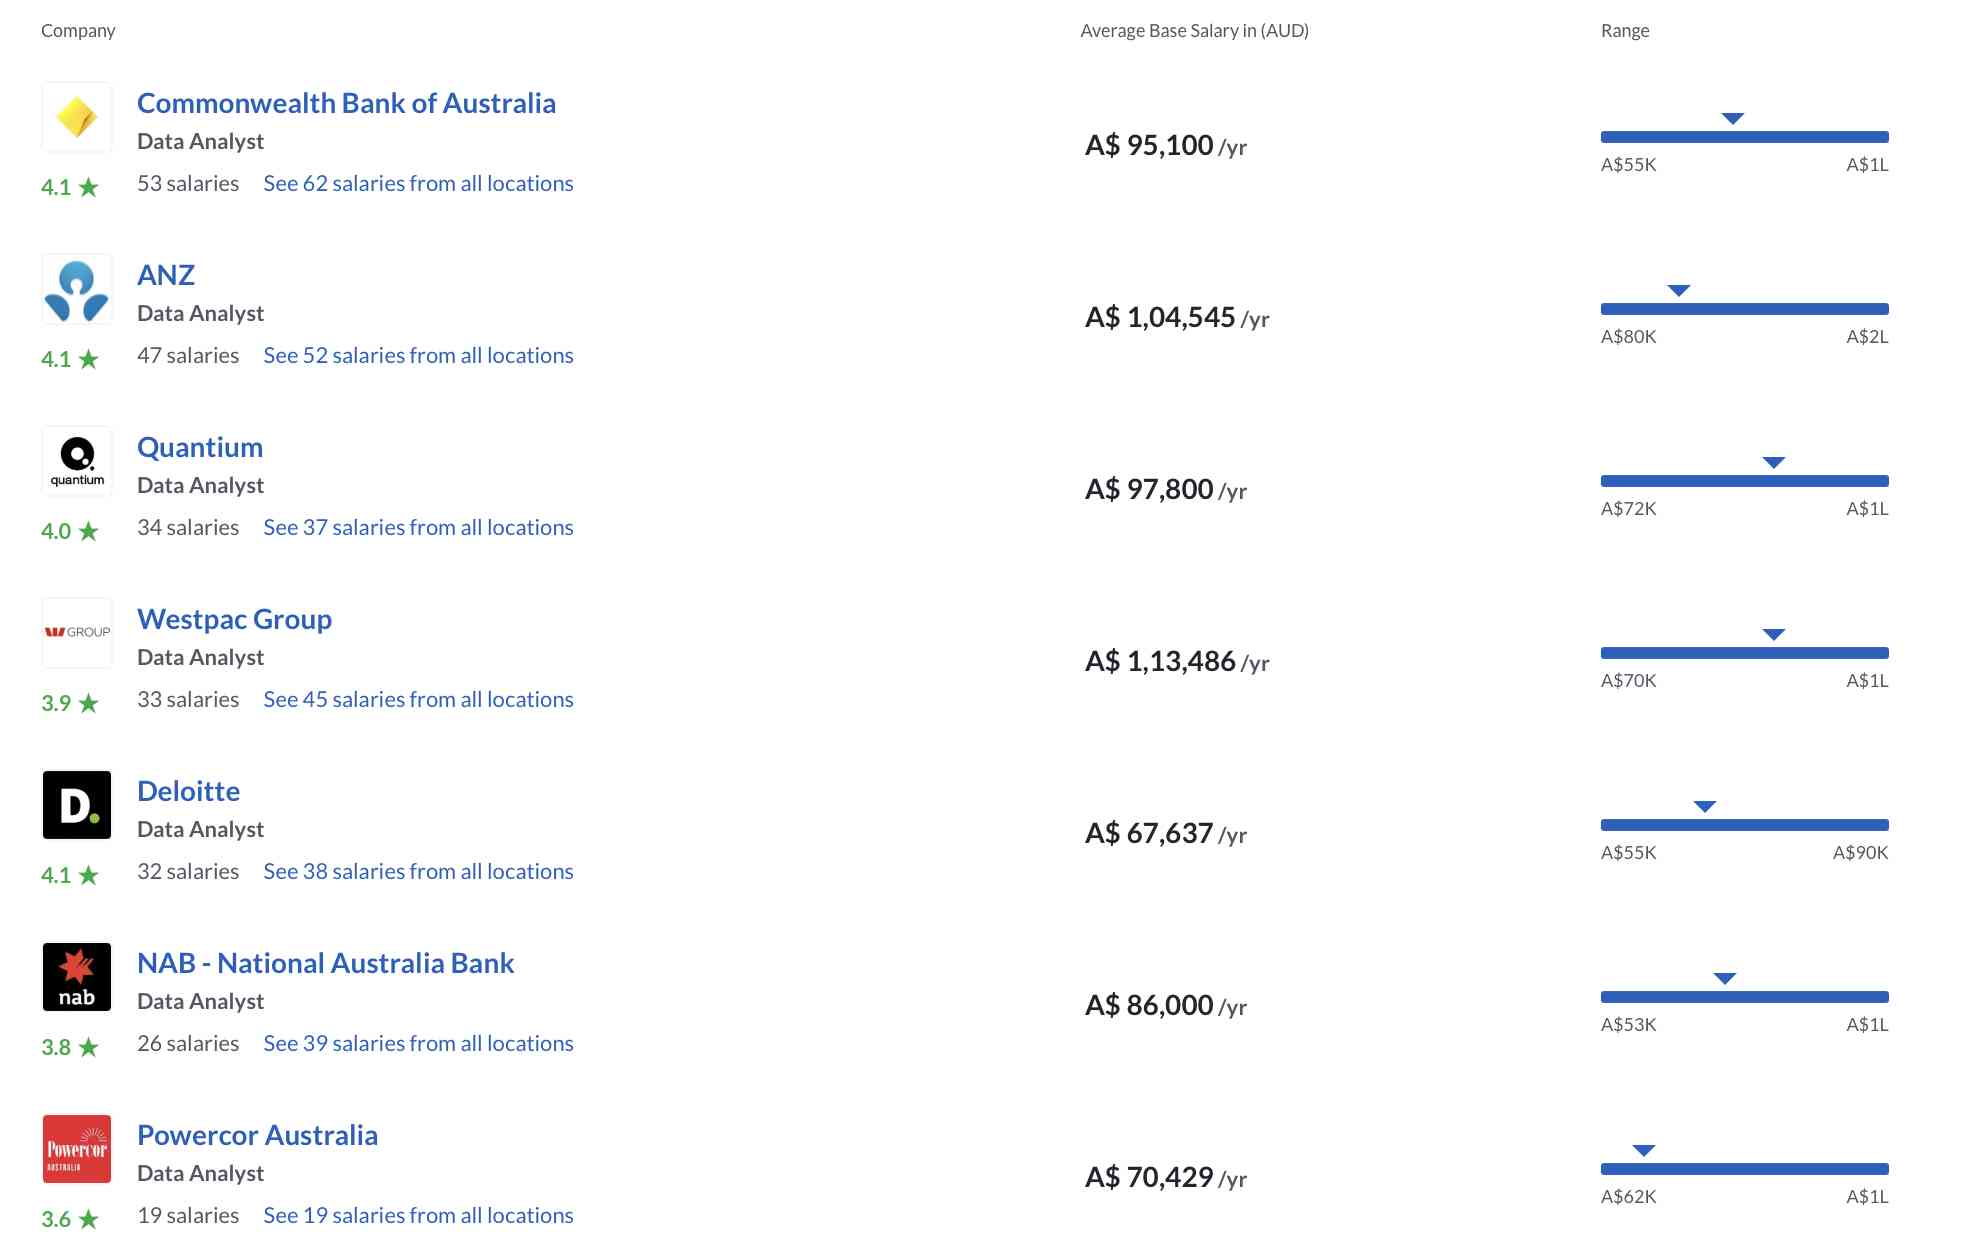 Data Analyst Salary Based on Companies in Australia